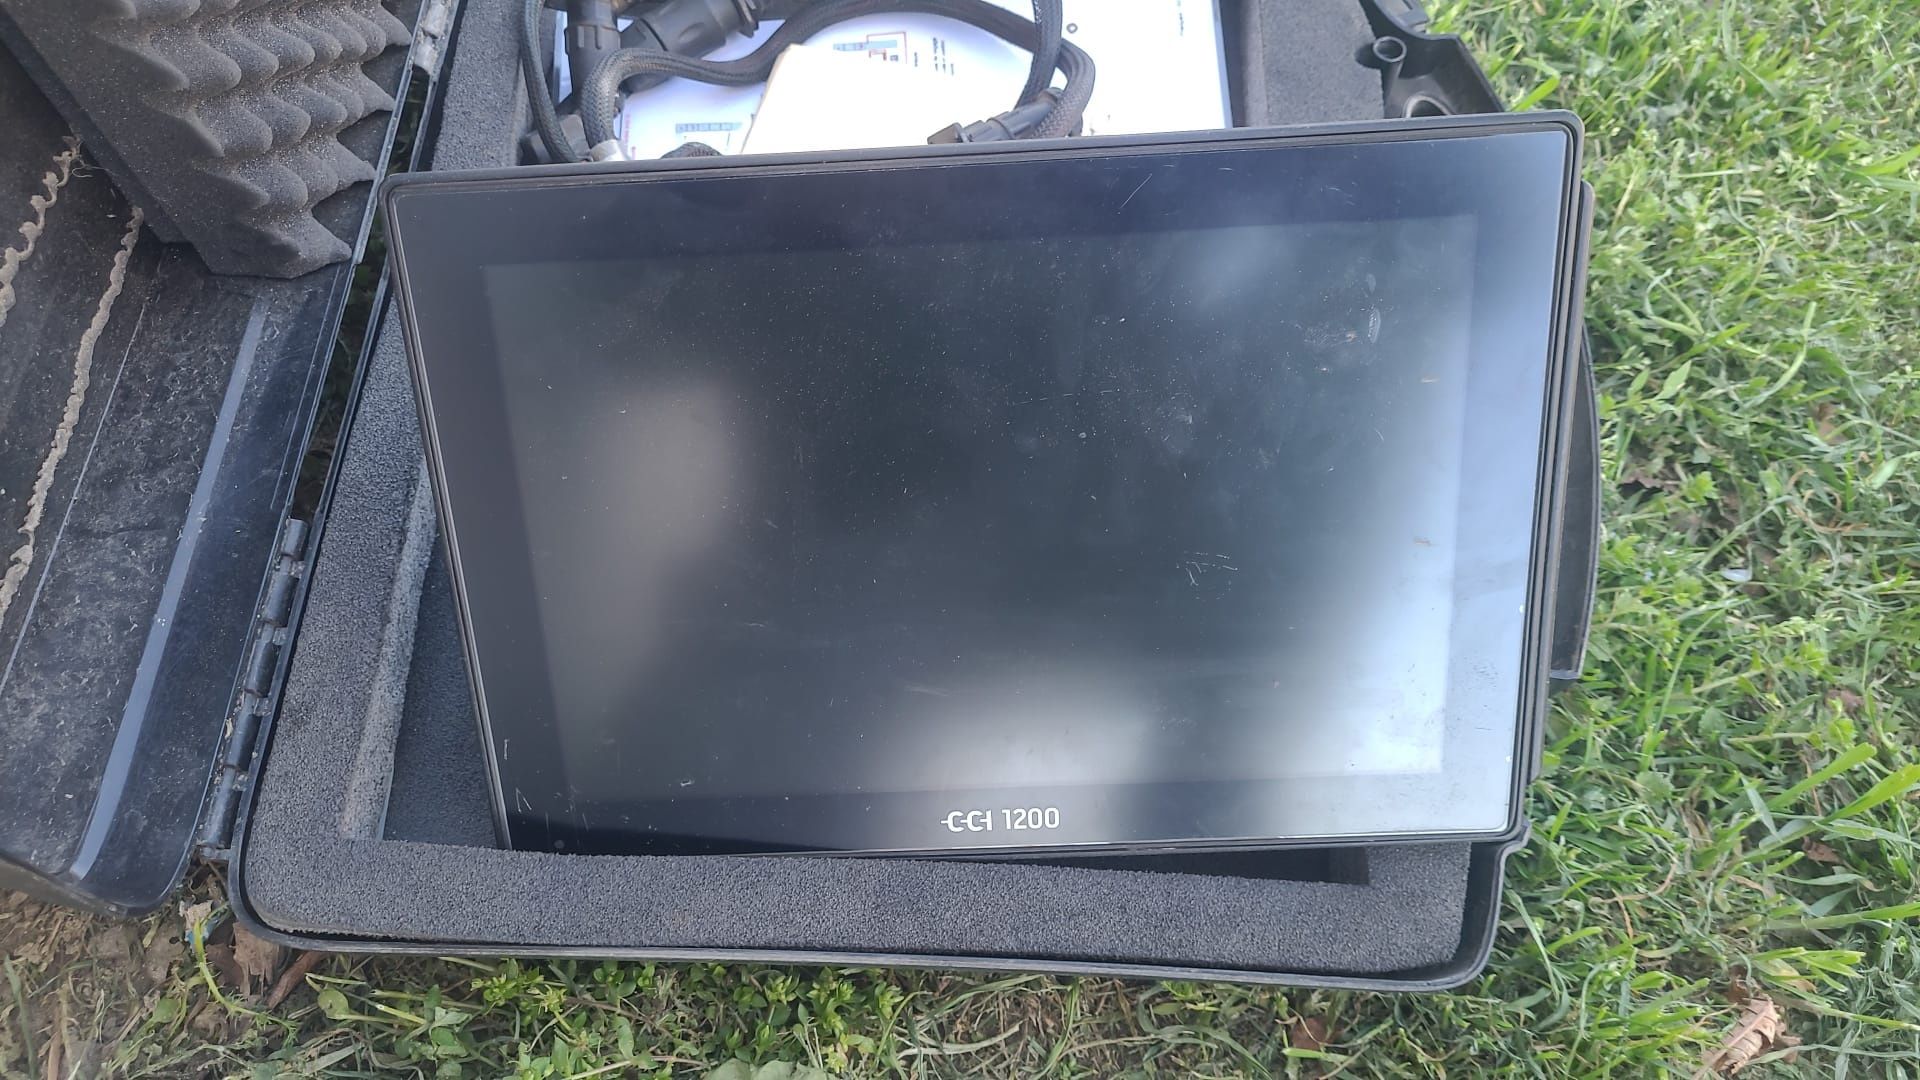 CCI 1200 GPS Isobus monitor